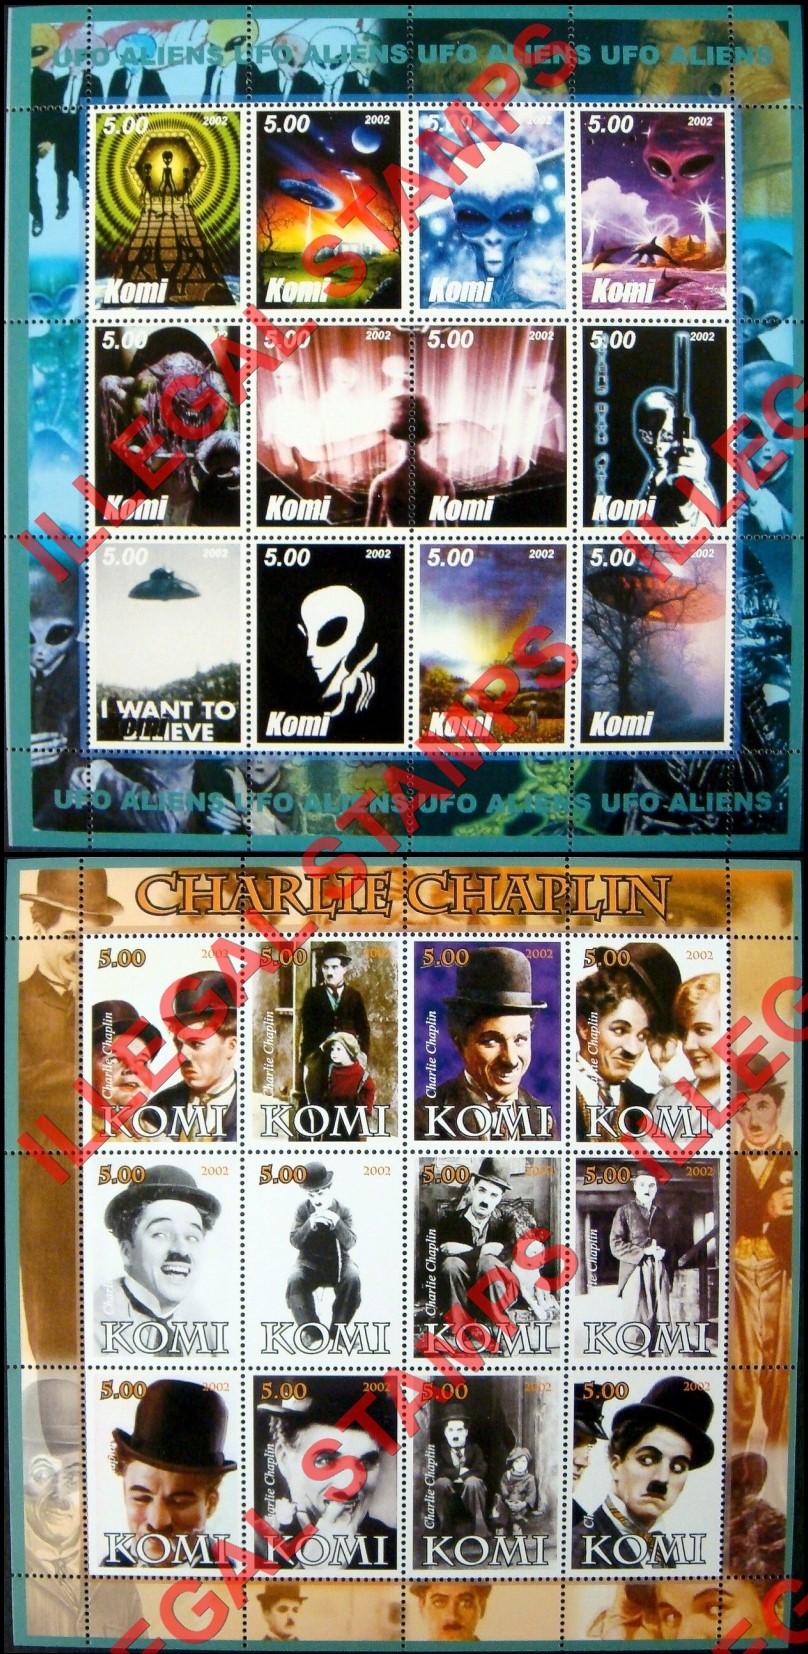 Komi Republic 2002 Counterfeit Illegal Stamps (Part 2)